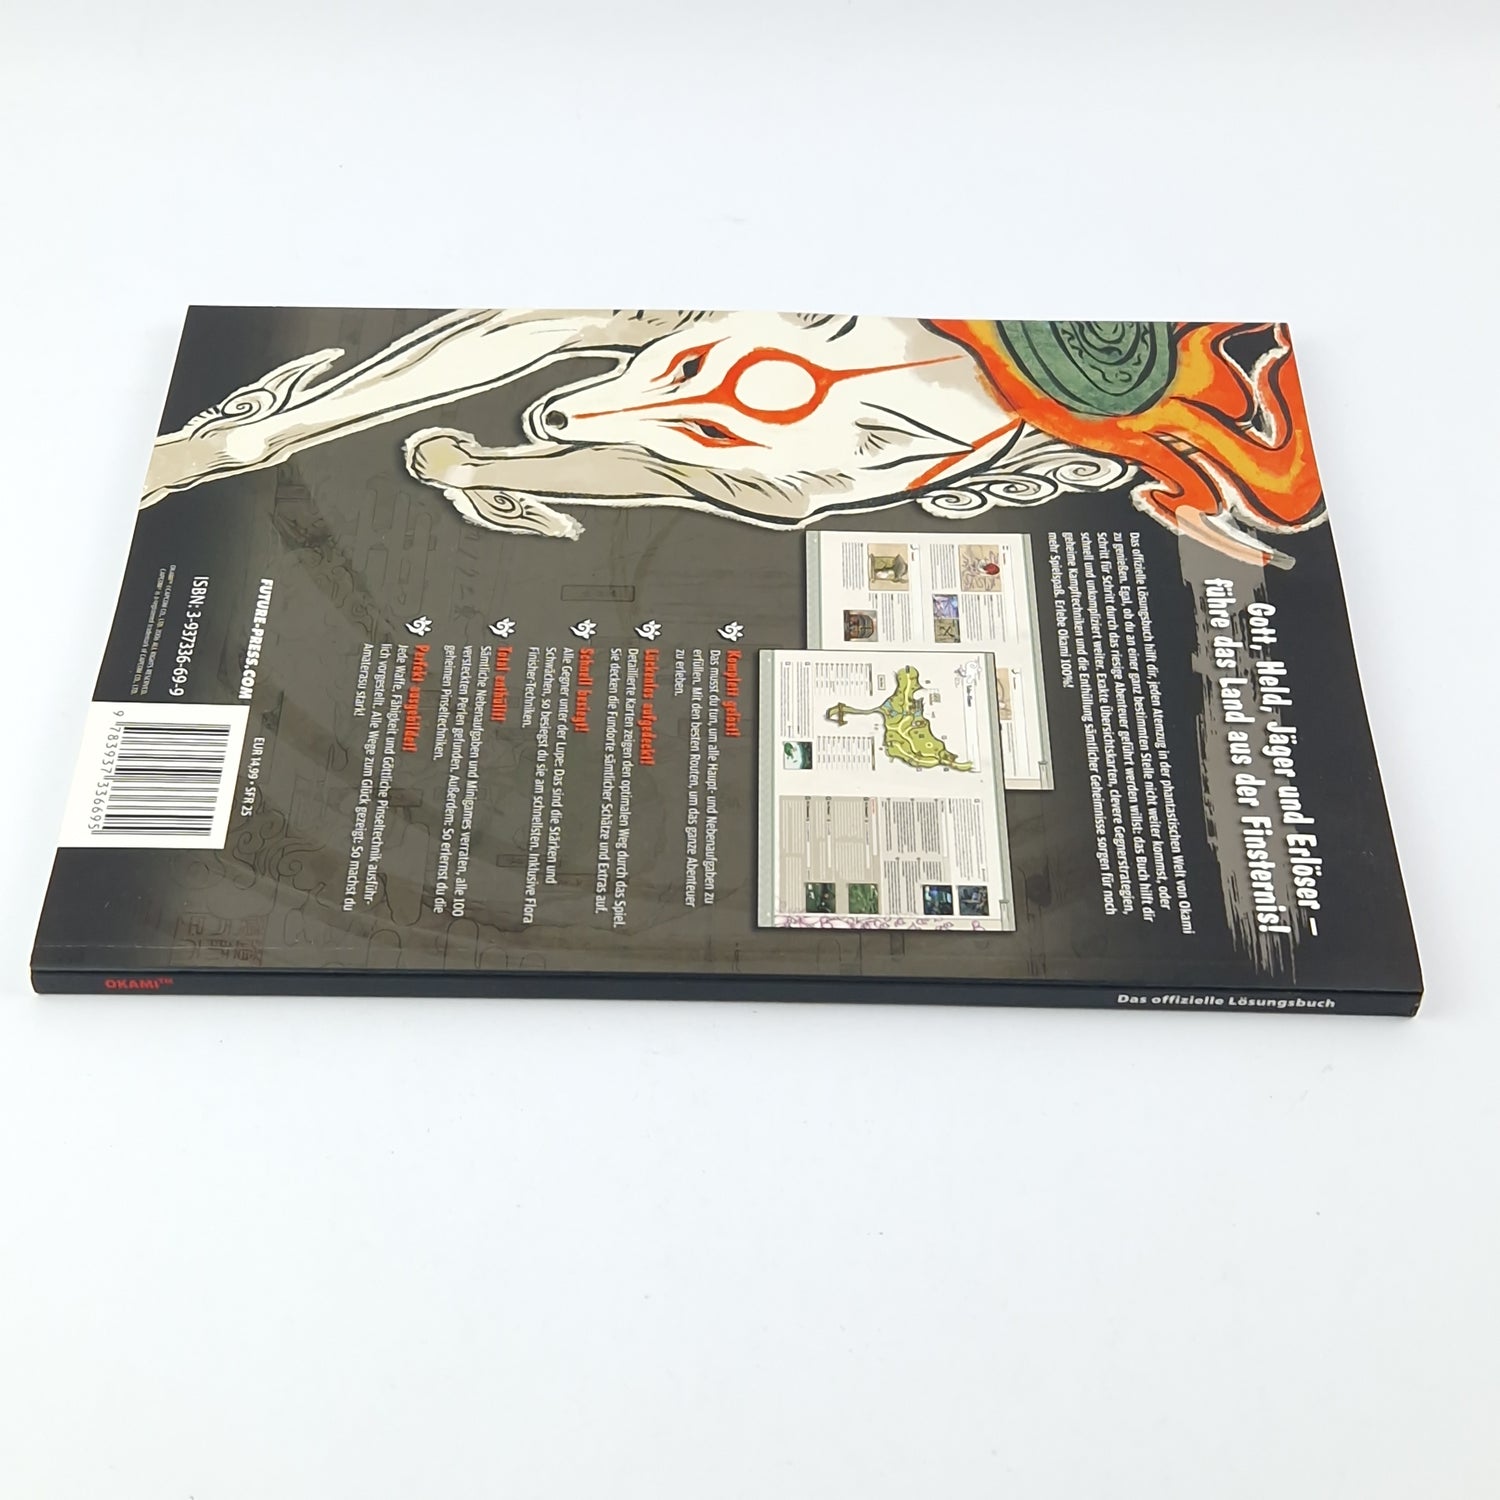 Playstation 2 game: Okami + solution book game advisor - SONY PS2 original packaging